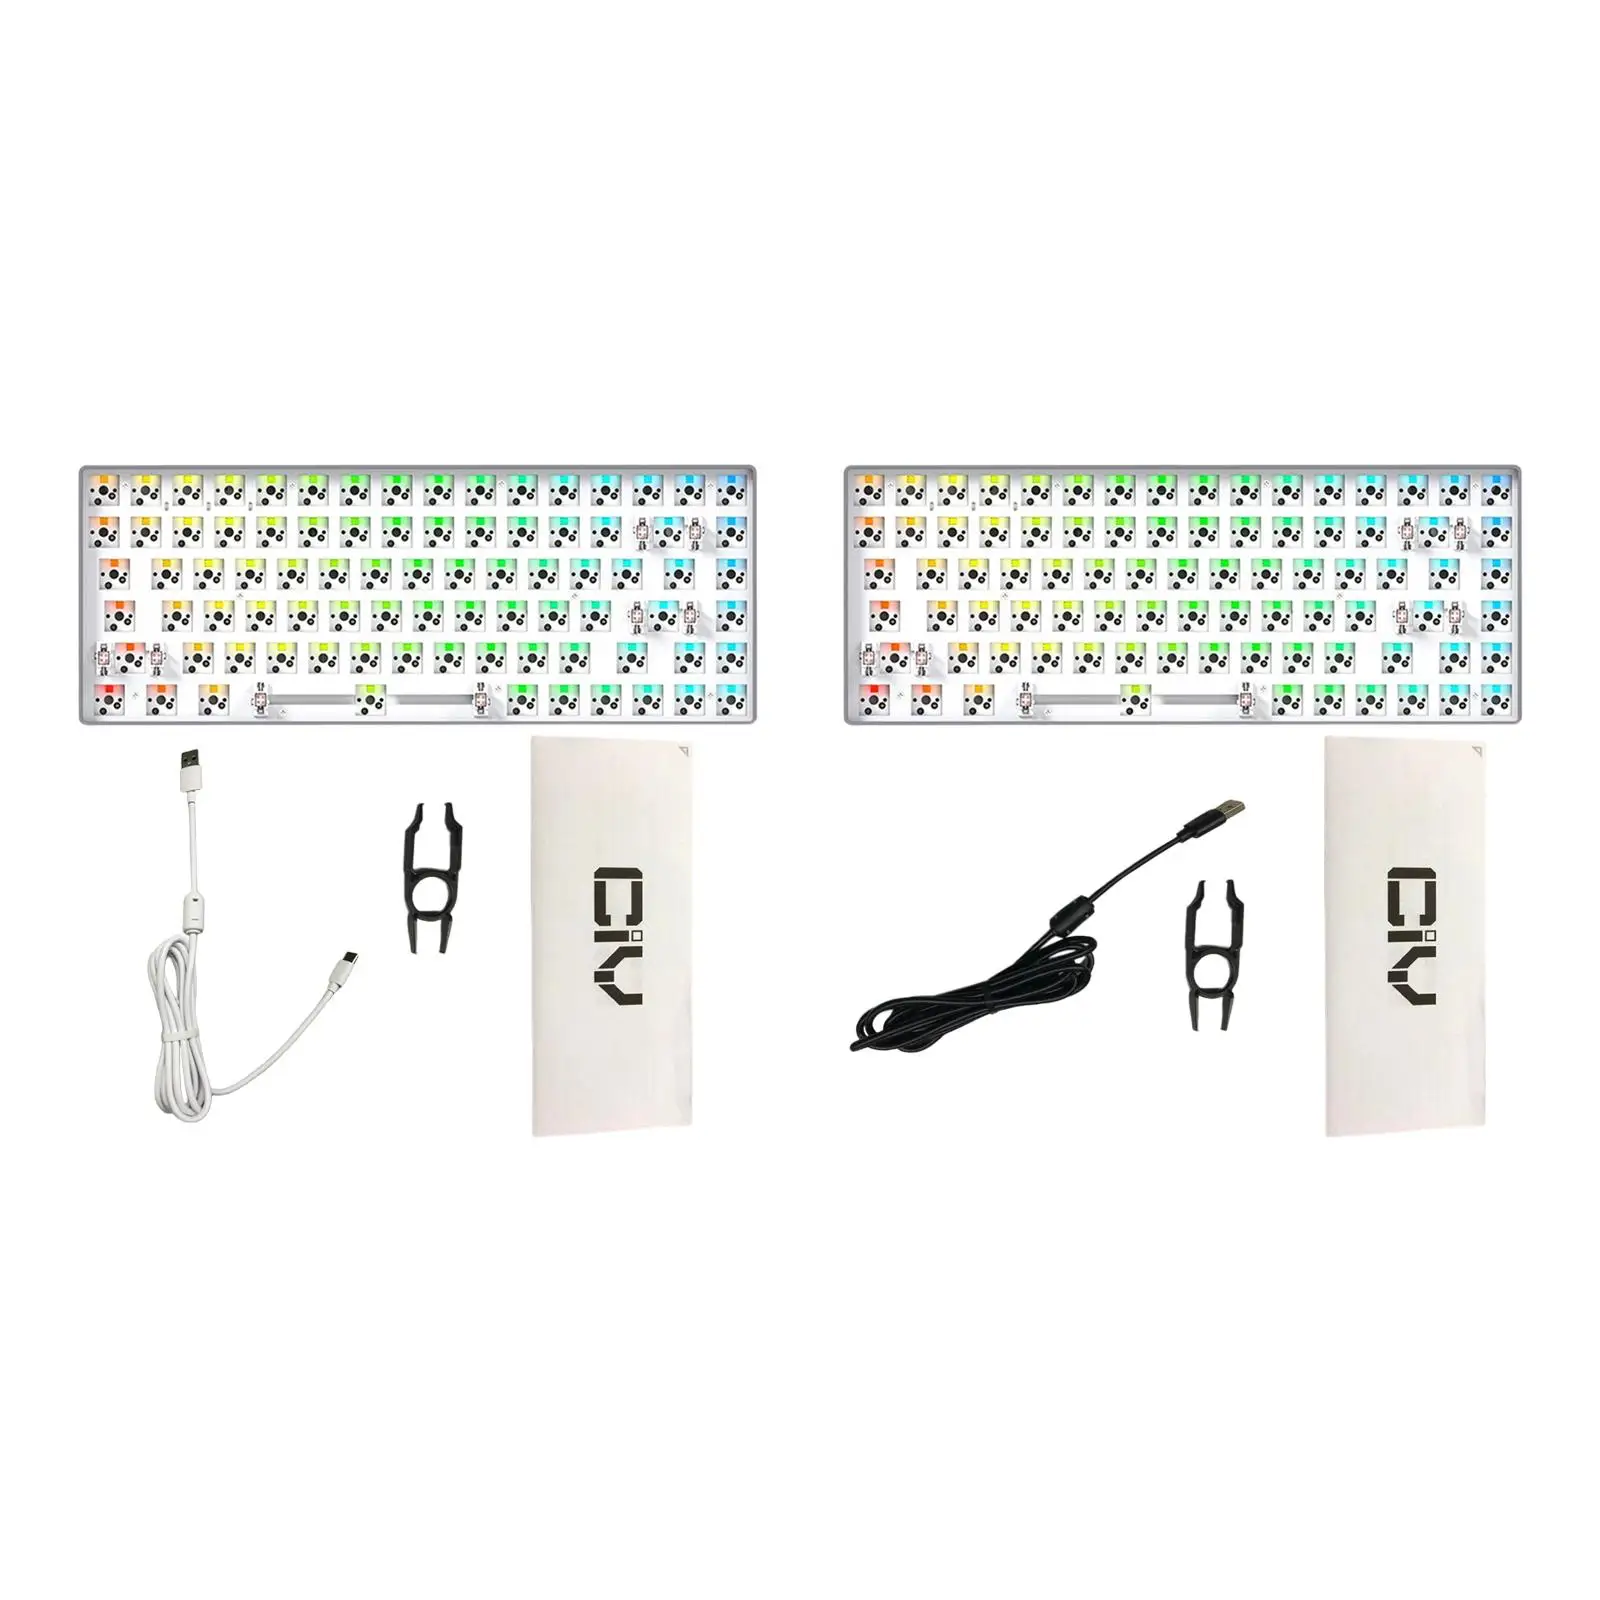 84 Keys Modular Mechanical Keyboard Hotswap Switch Sockets DIY Kit Gaming Fine Tuned Satellite Axis with Shaft Puller